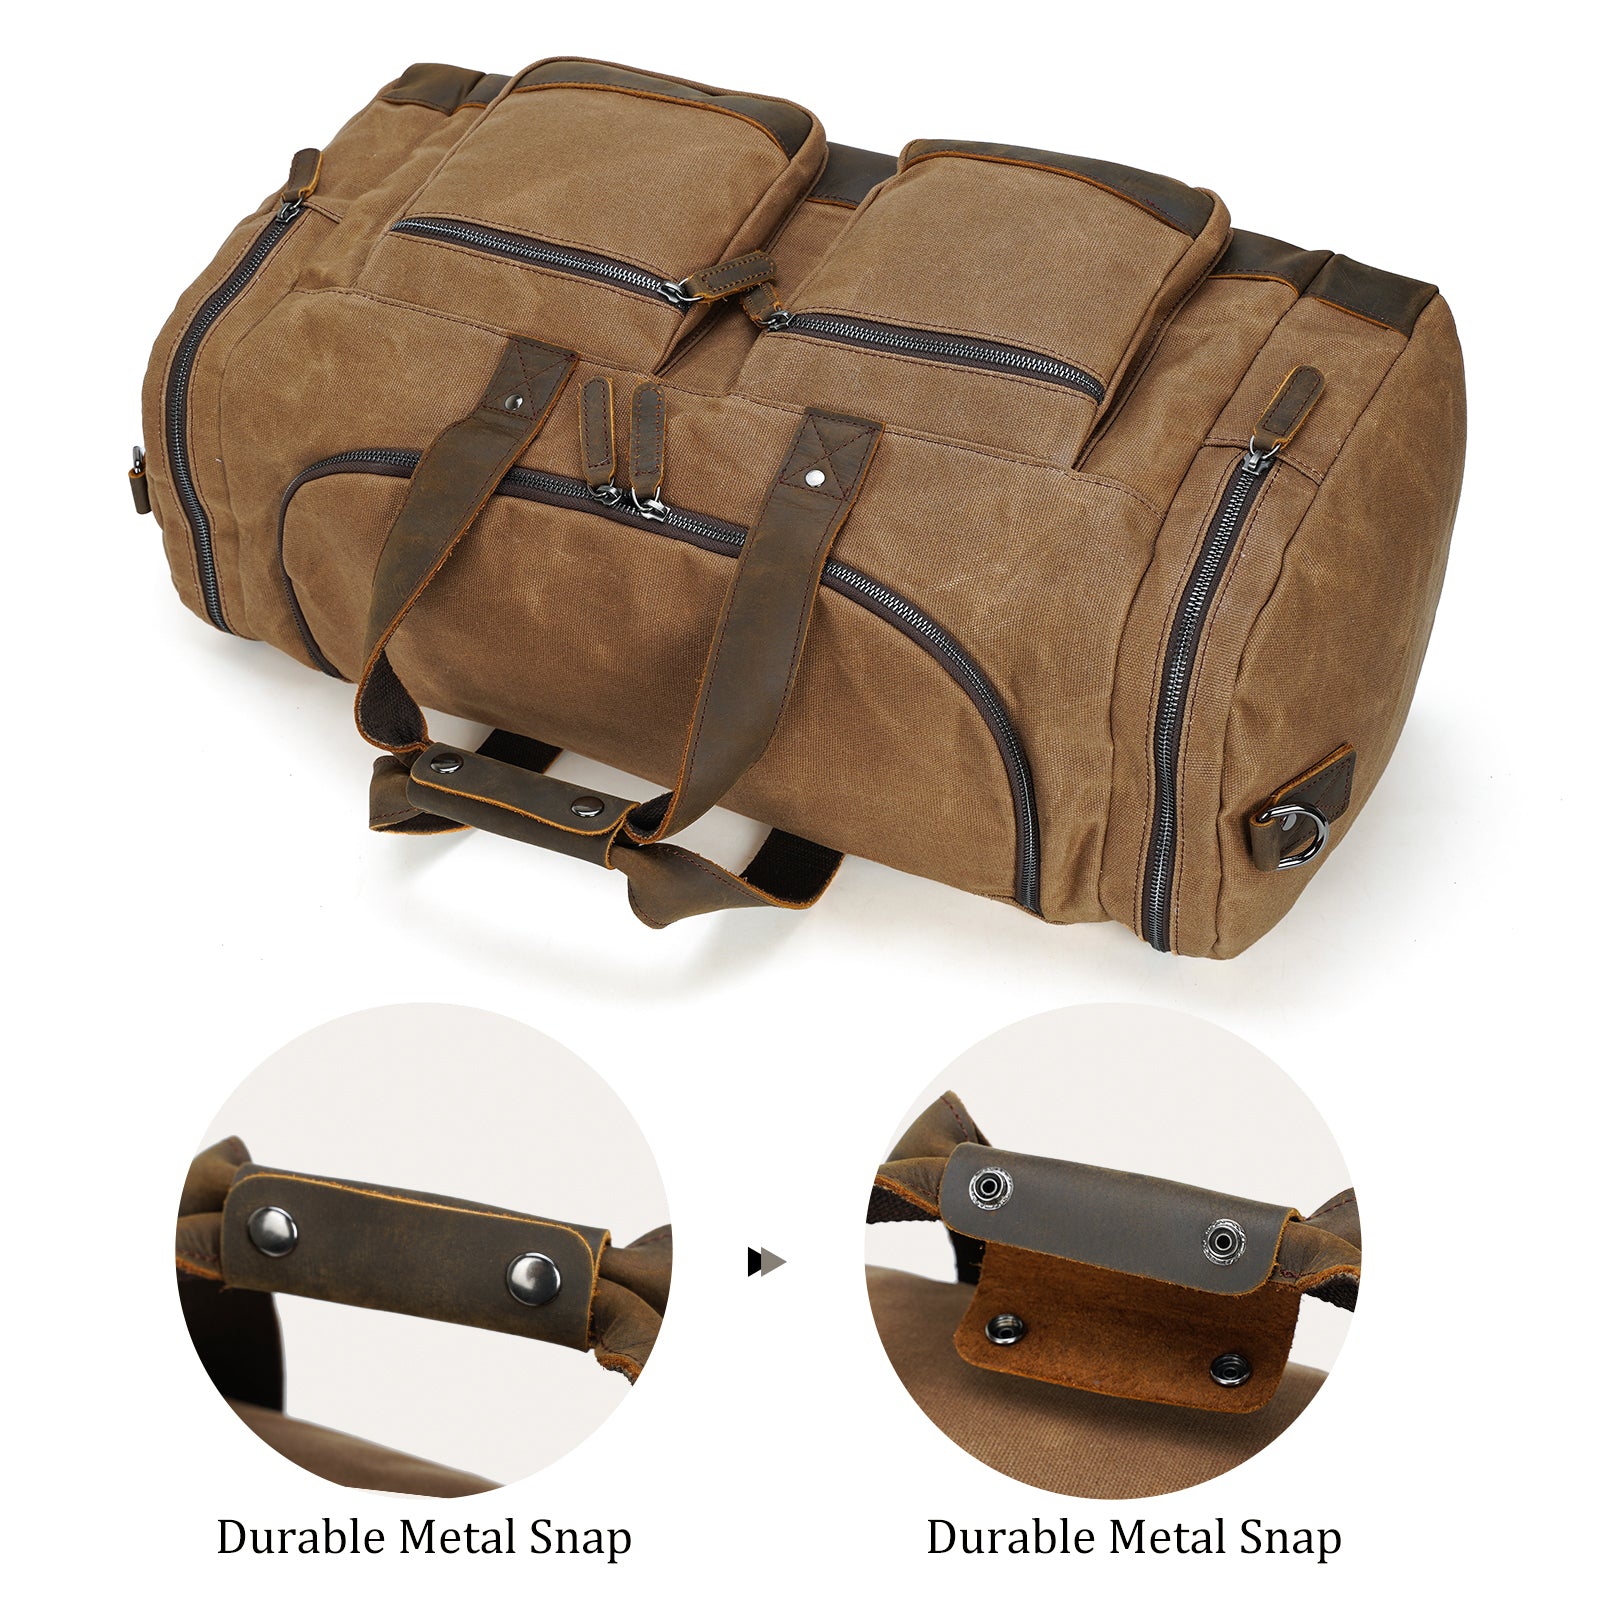 Polare 23” Waterproof Travel Duffel Bag Waxed Canvas